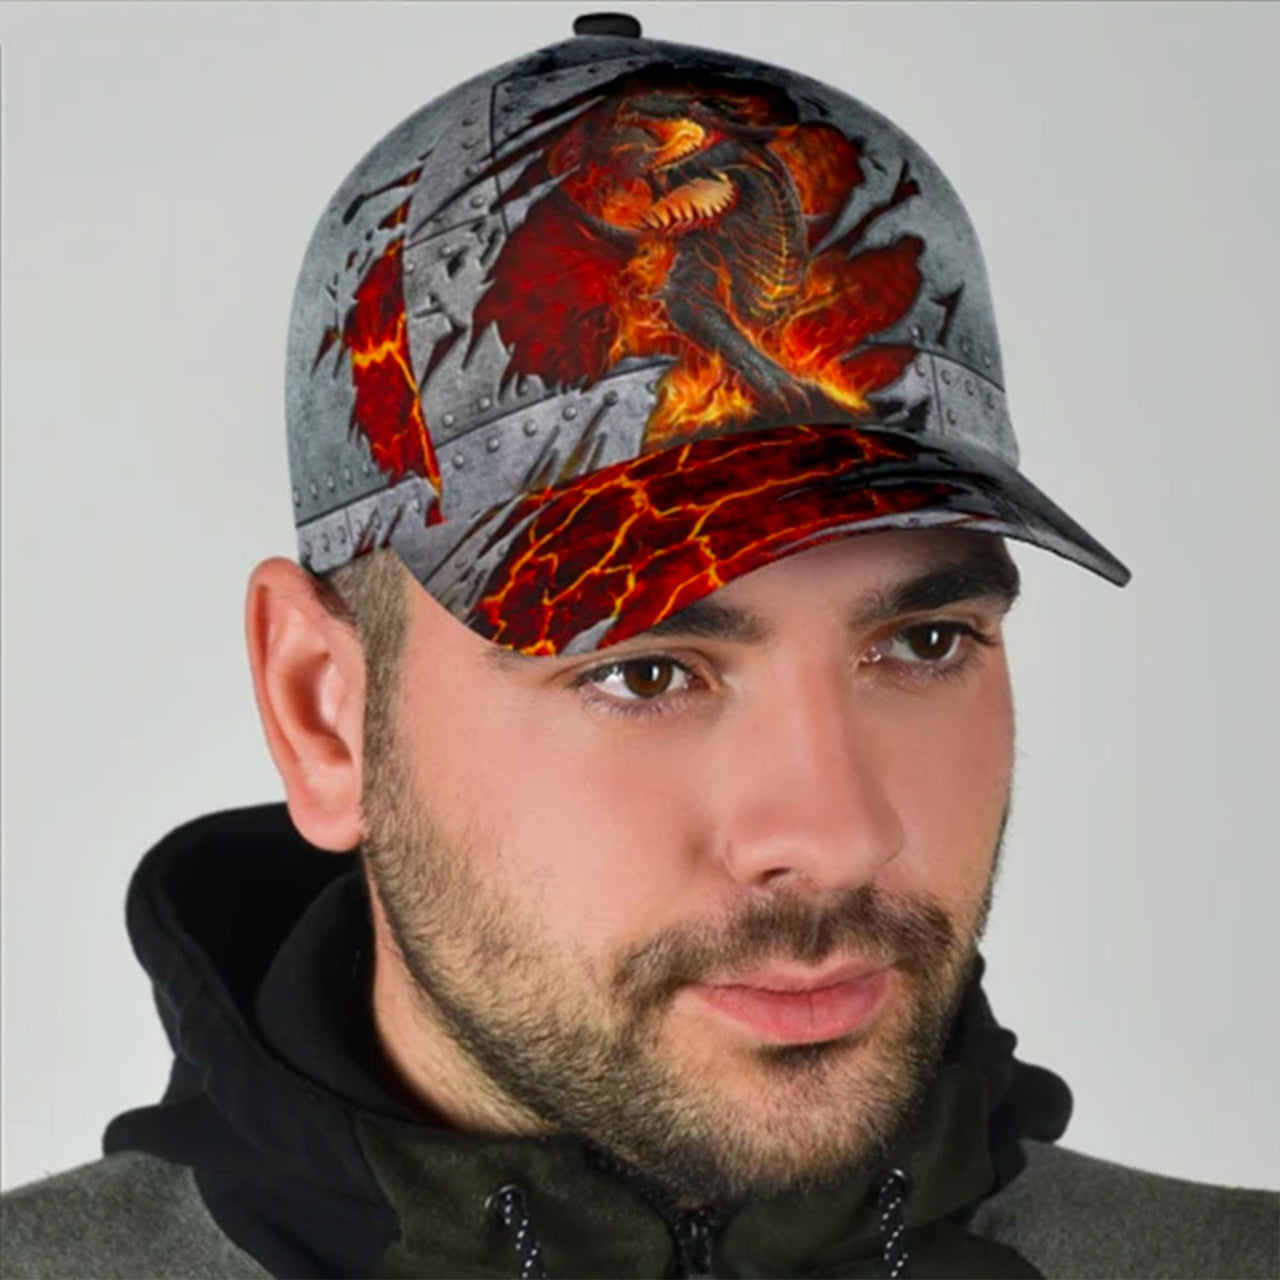 Red Fire Dragon Custom Hats for Men & Women 3D Prints Personalized Baseball Caps